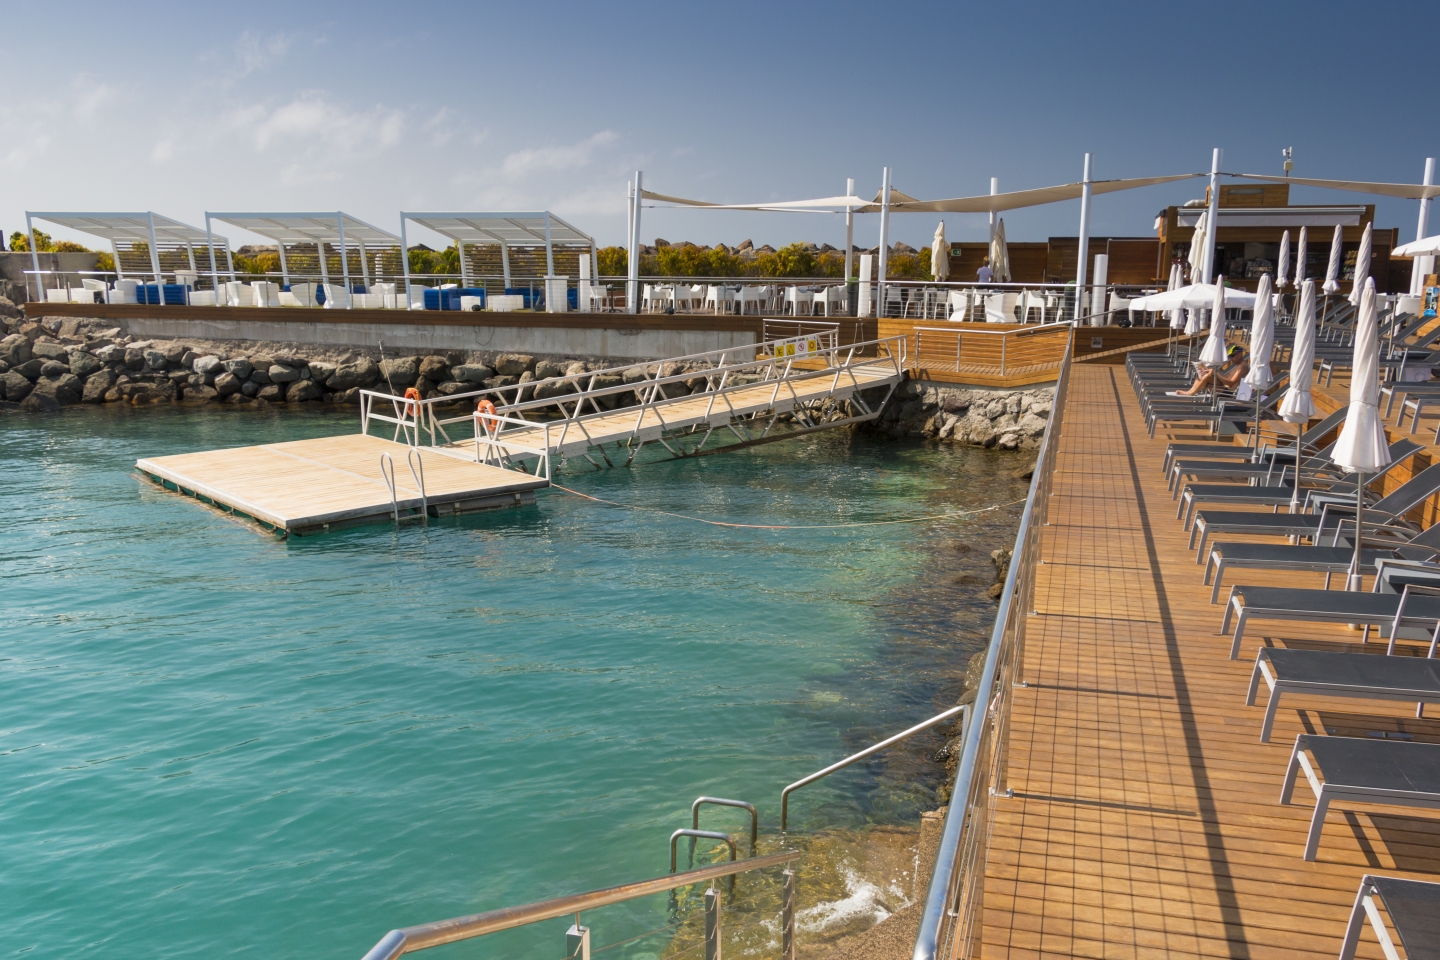 Swimming area at the blue flag Pasito Blanco marina